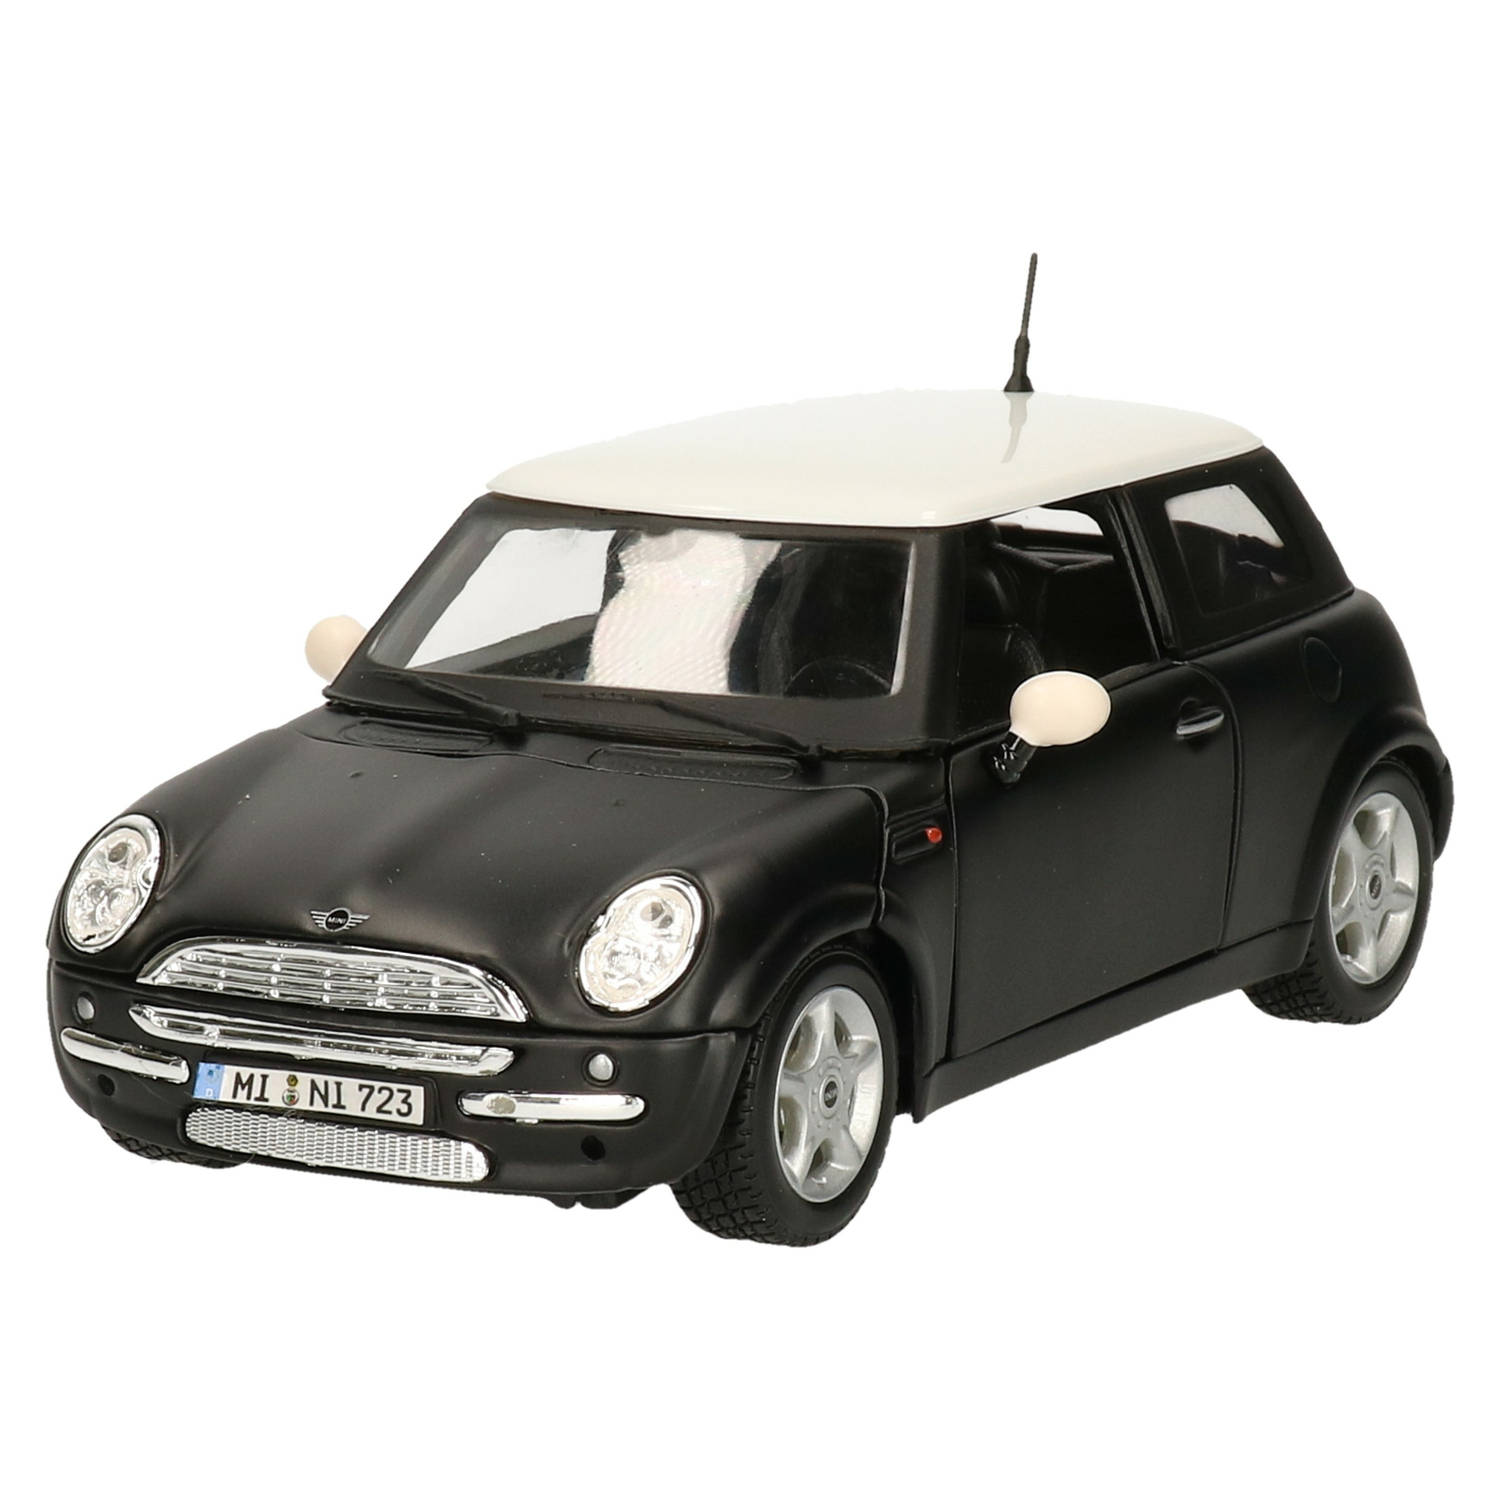 Maisto modelauto/speelgoedauto Mini Cooper - mat zwart - schaal 1:24/16 x 7 x 7 cm